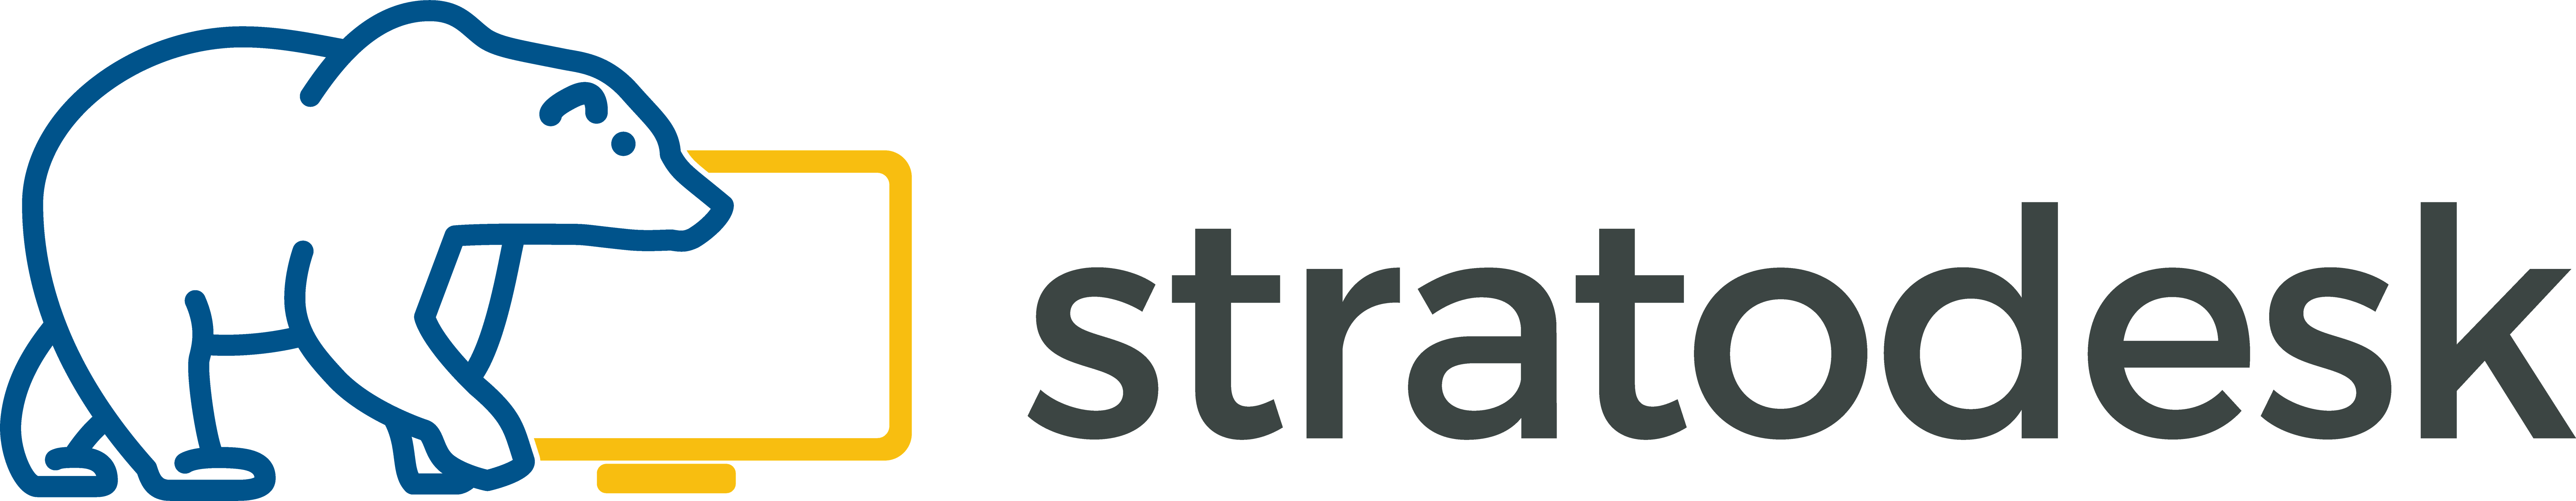 stratodesk_logo_horizontal_positive_Pantone